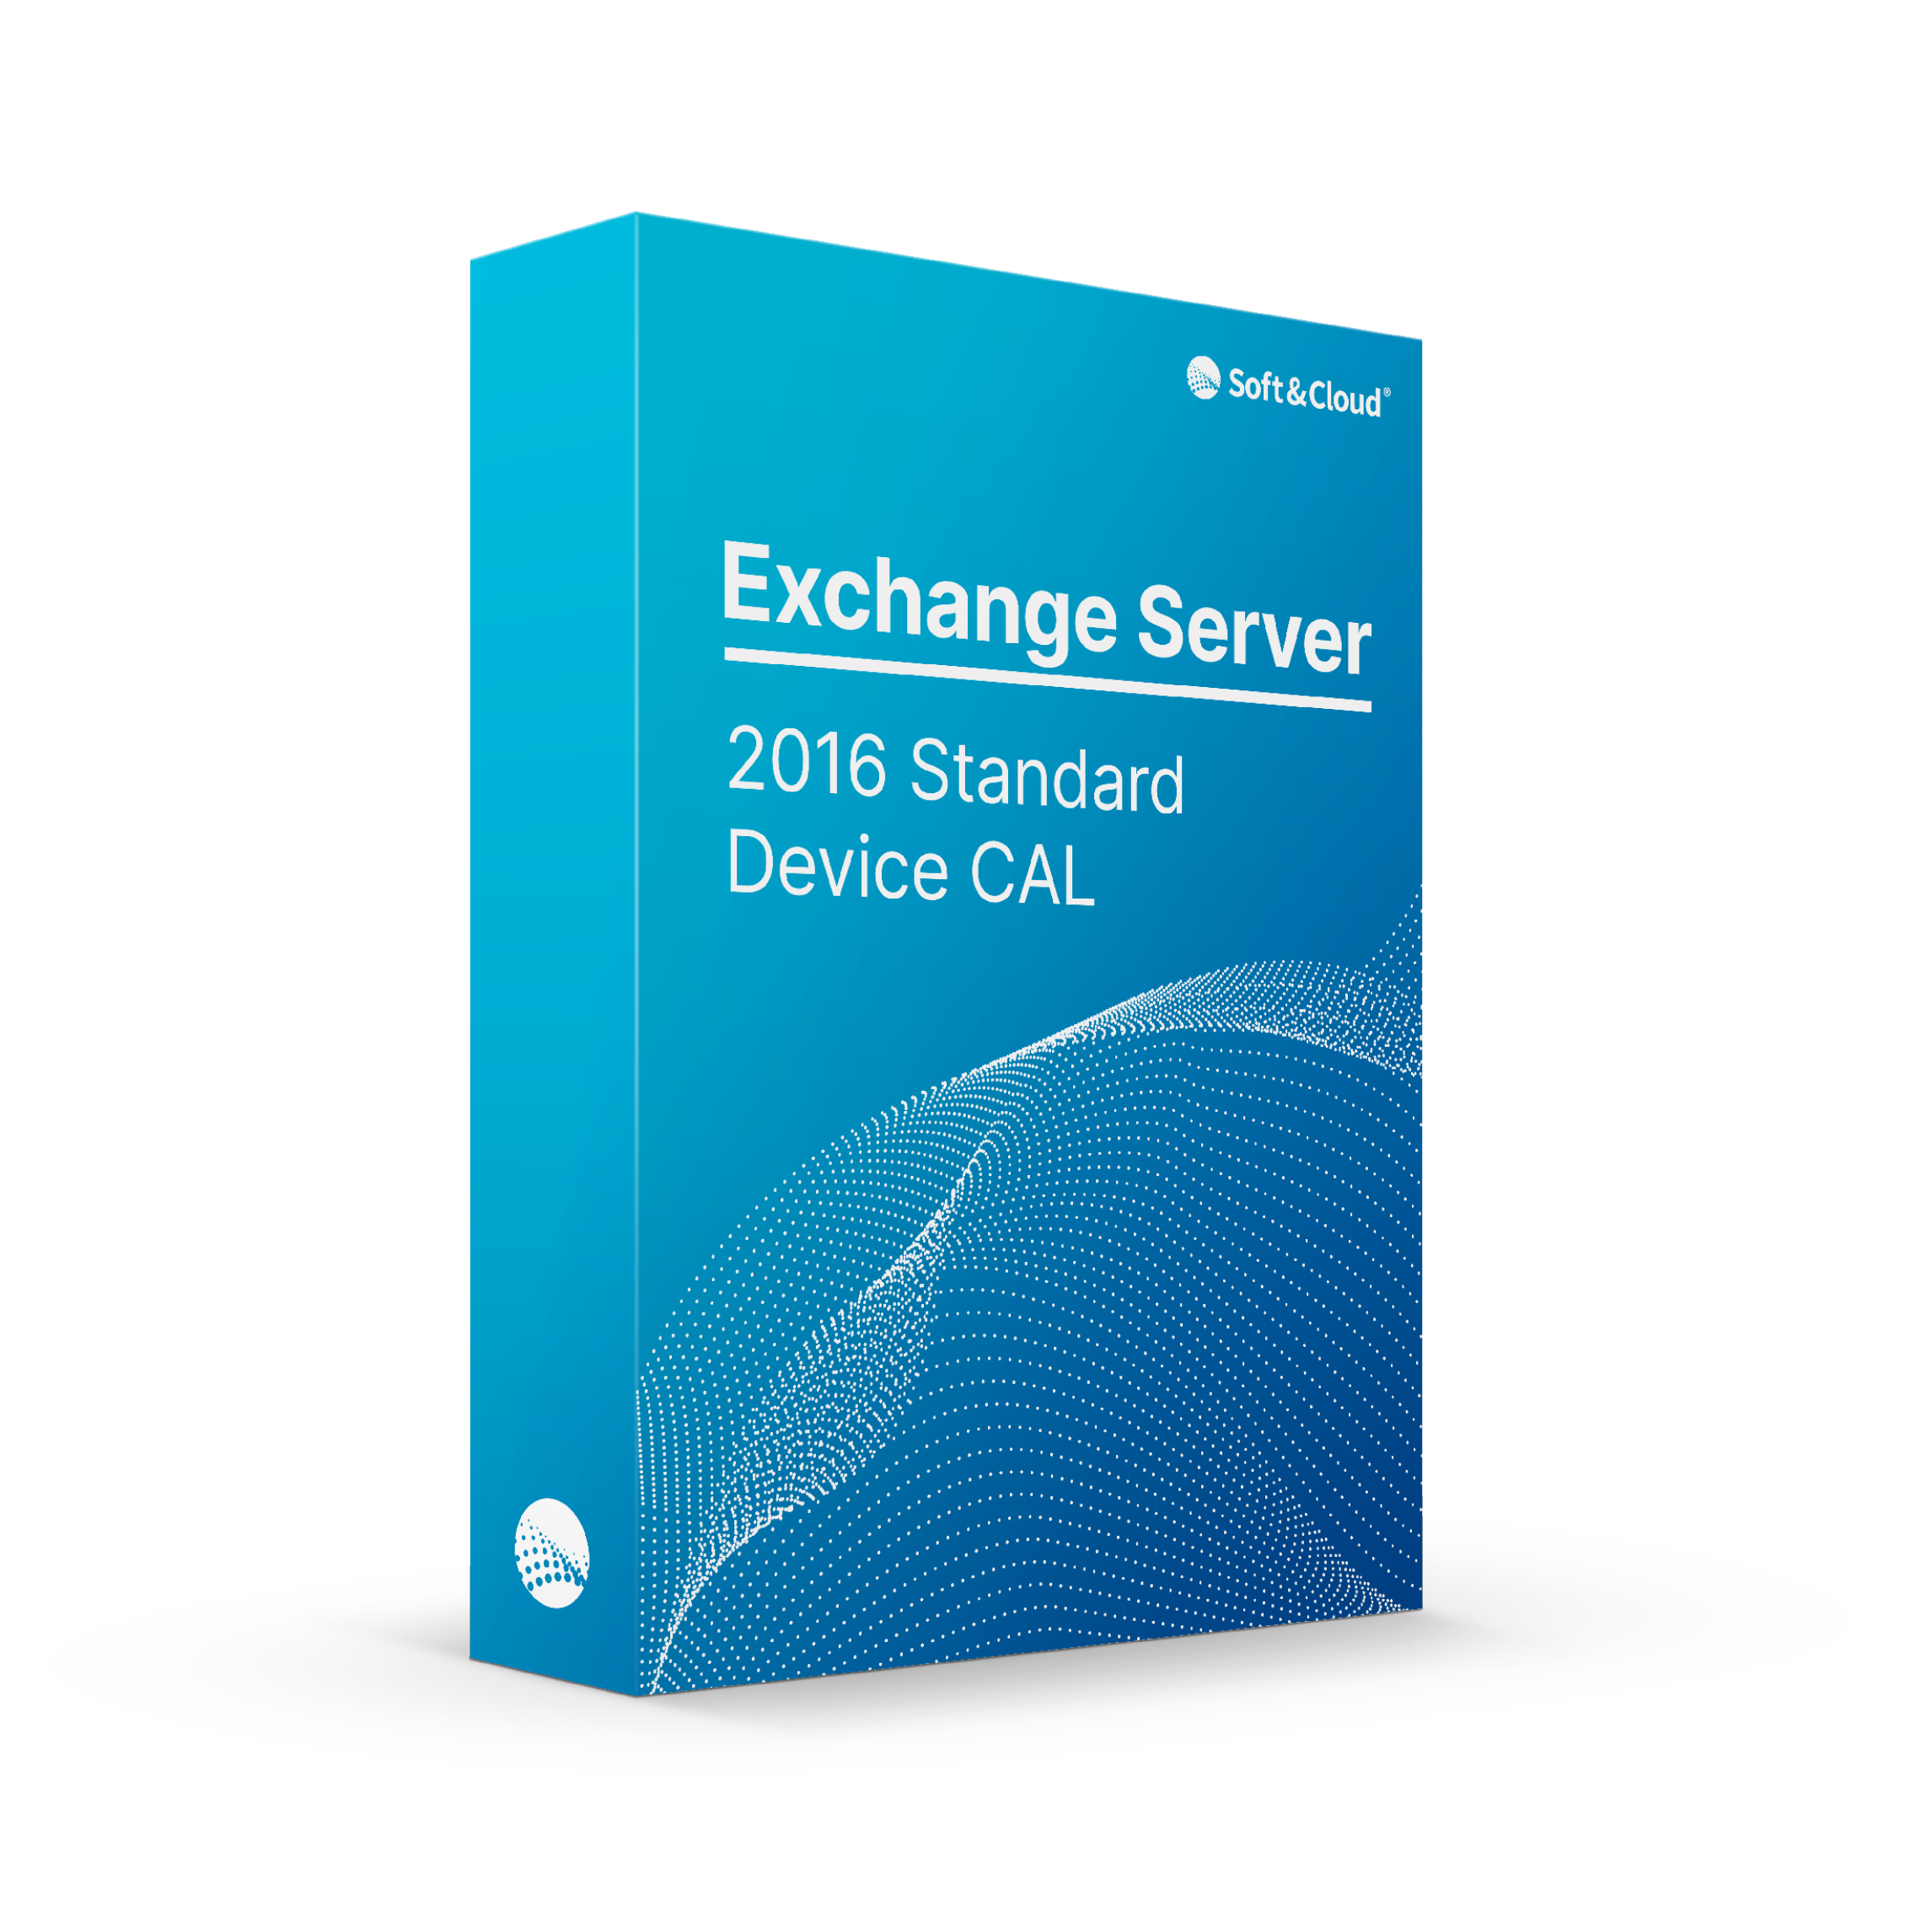 Exchange Server 2016 Standard Device CAL